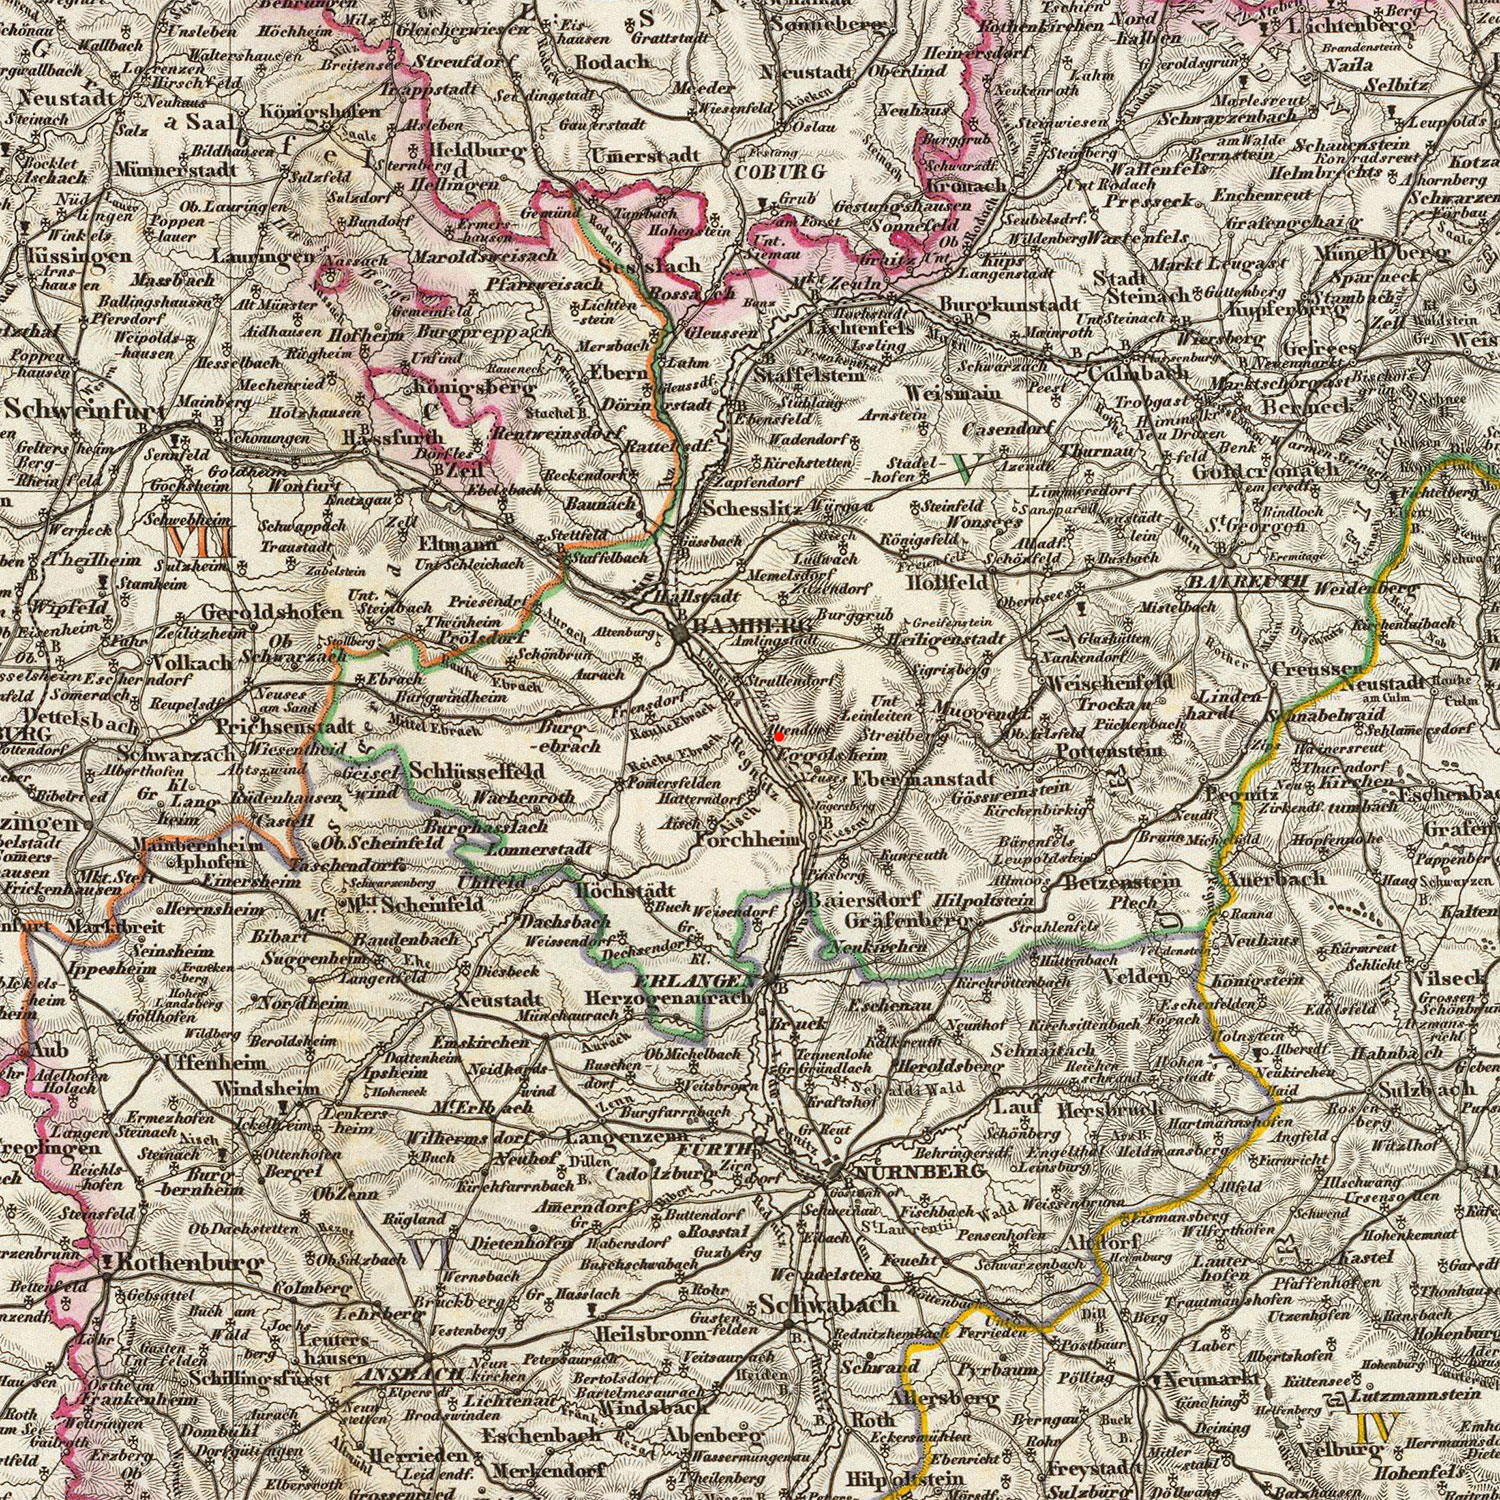 Buttenheim, Germany on 1856 map © 2000 Cartography Associates (DavidRumsey.com)